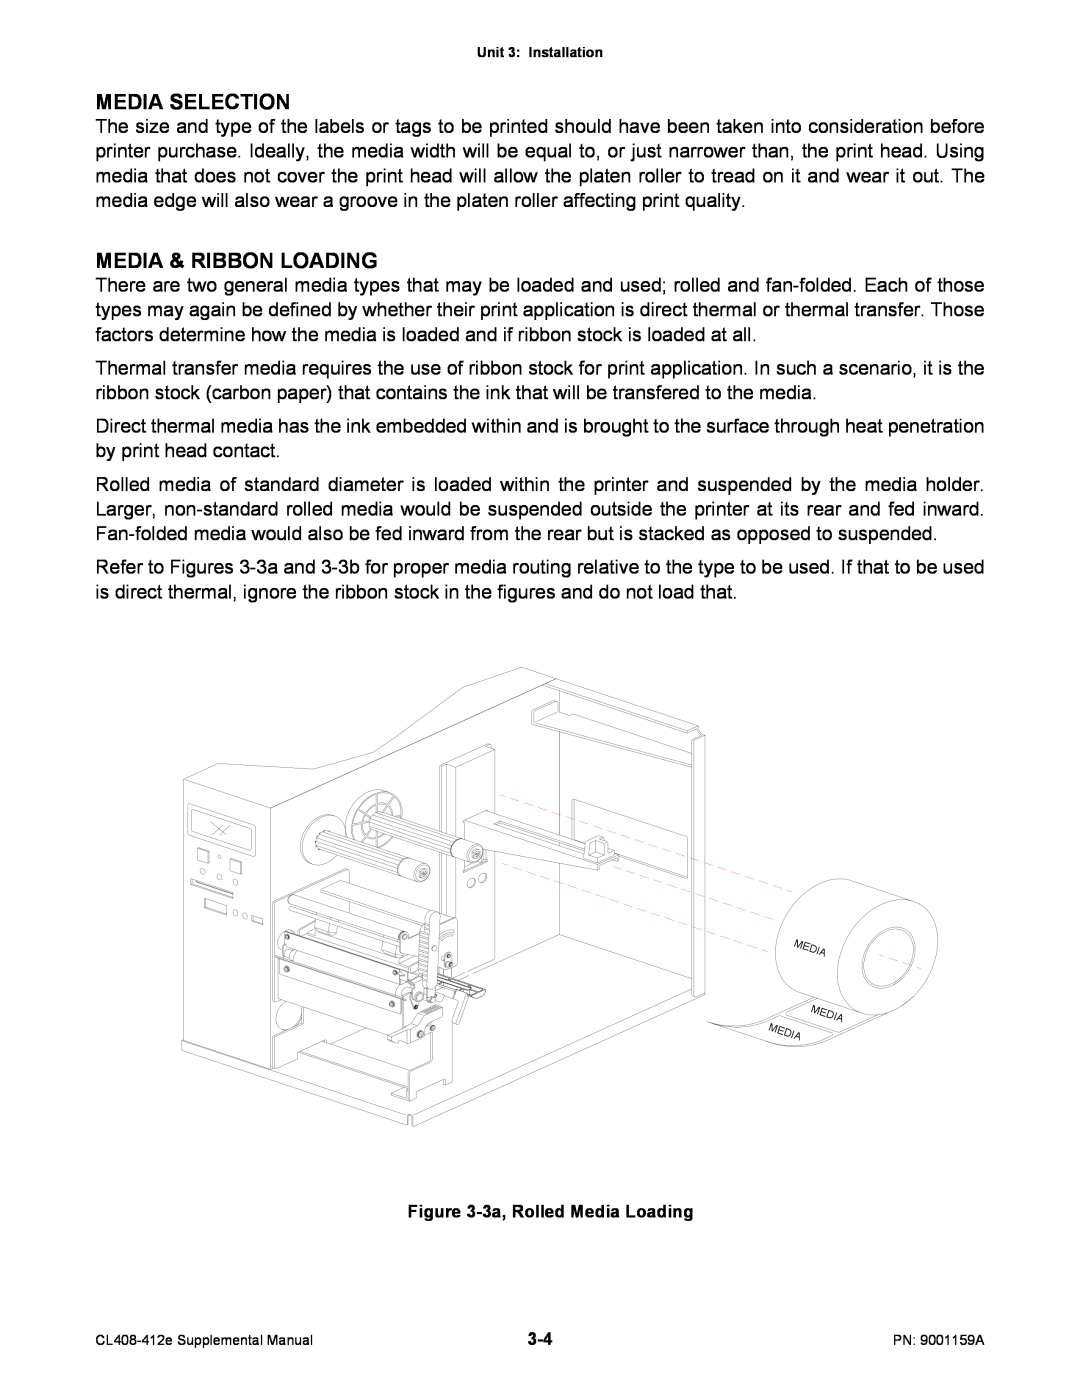 SATO CL408-412e manual Media Selection, Media & Ribbon Loading, 3a, Rolled Media Loading 